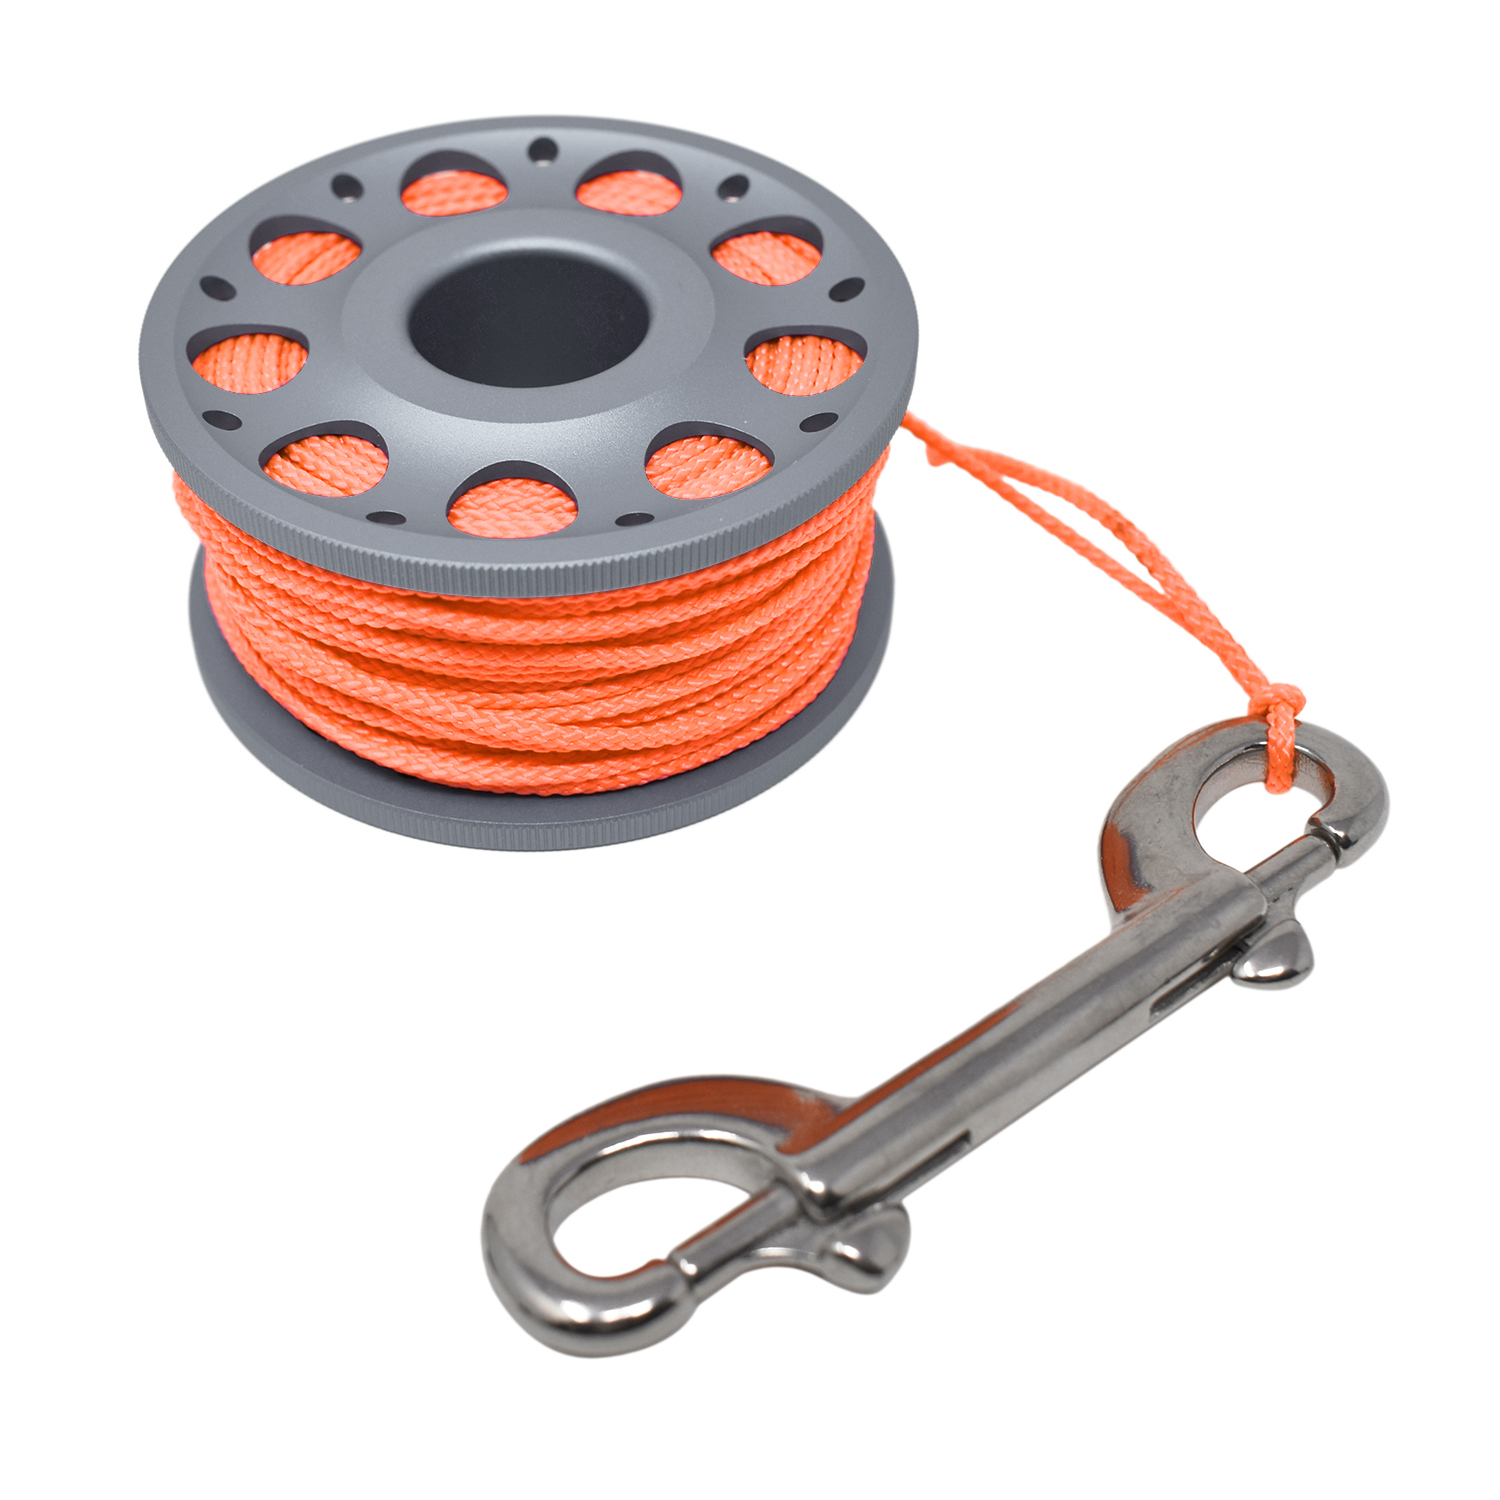 Aluminum Finger Spool 100ft Dive Reel w/ Retractable Holder, Gray/Orange - image 4 of 4